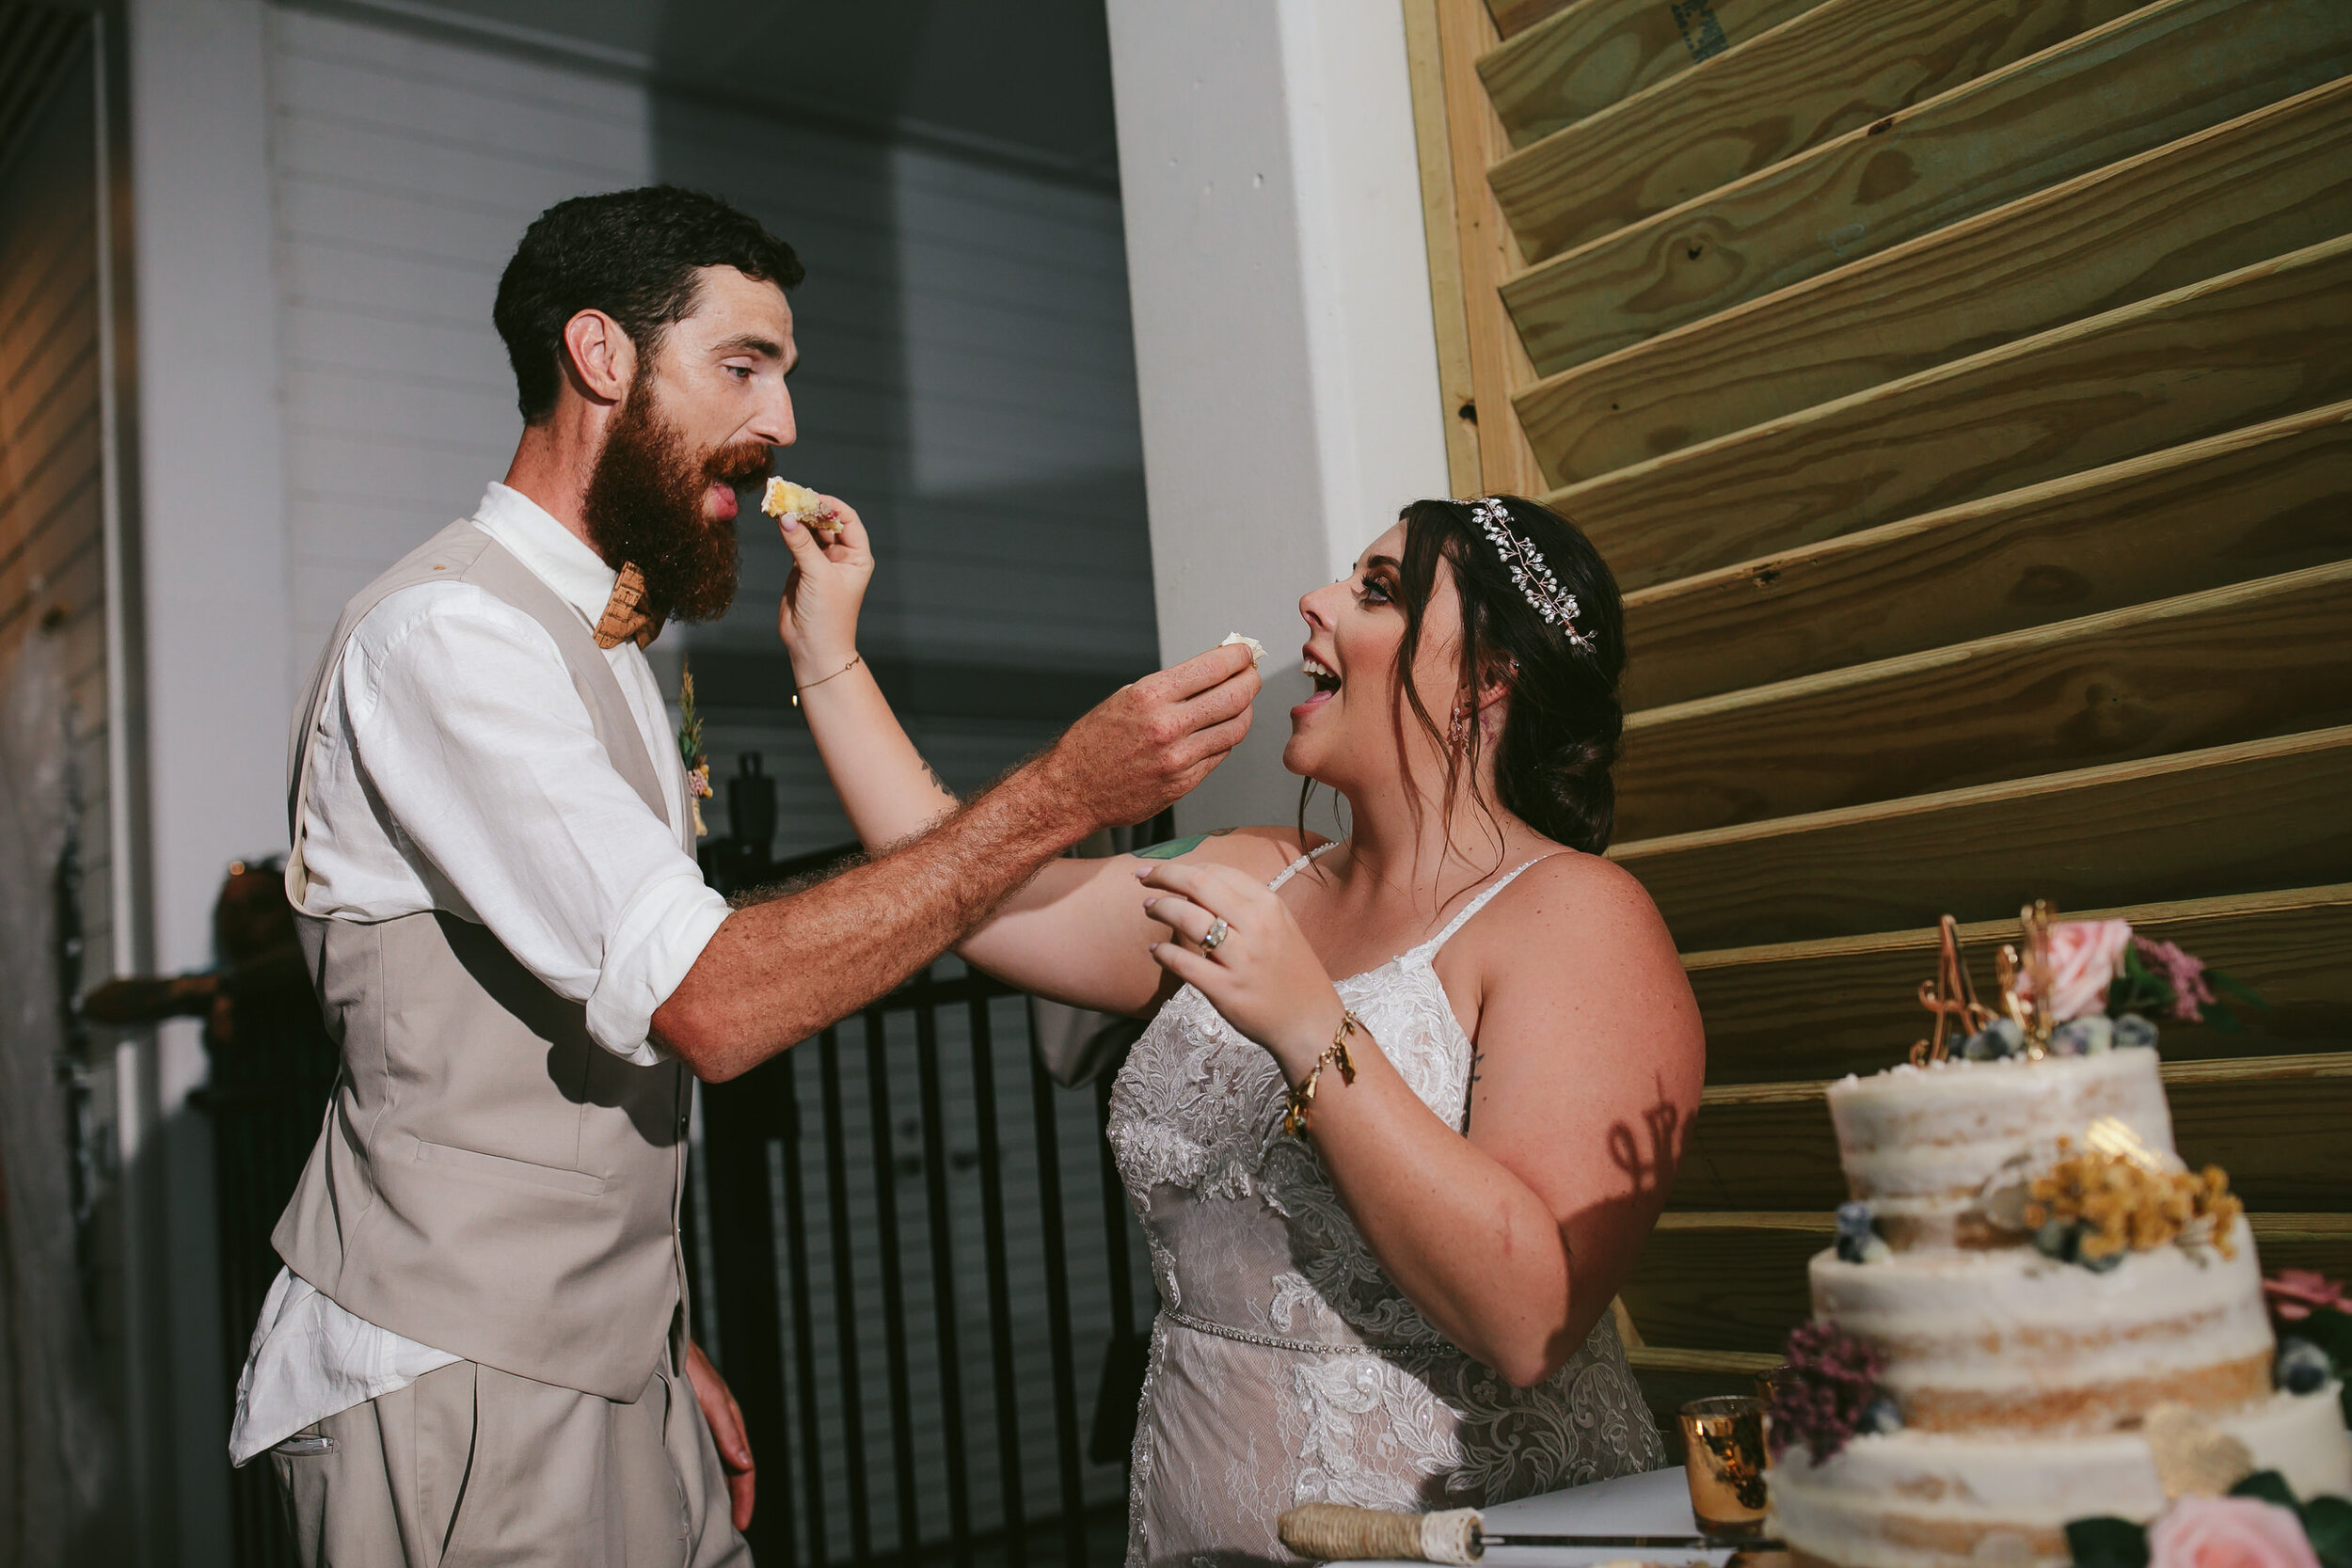 Bride-and-Groom-Feeding-Each-Other-Cake-Port-St-Joe-Backyard-Wedding-Reception